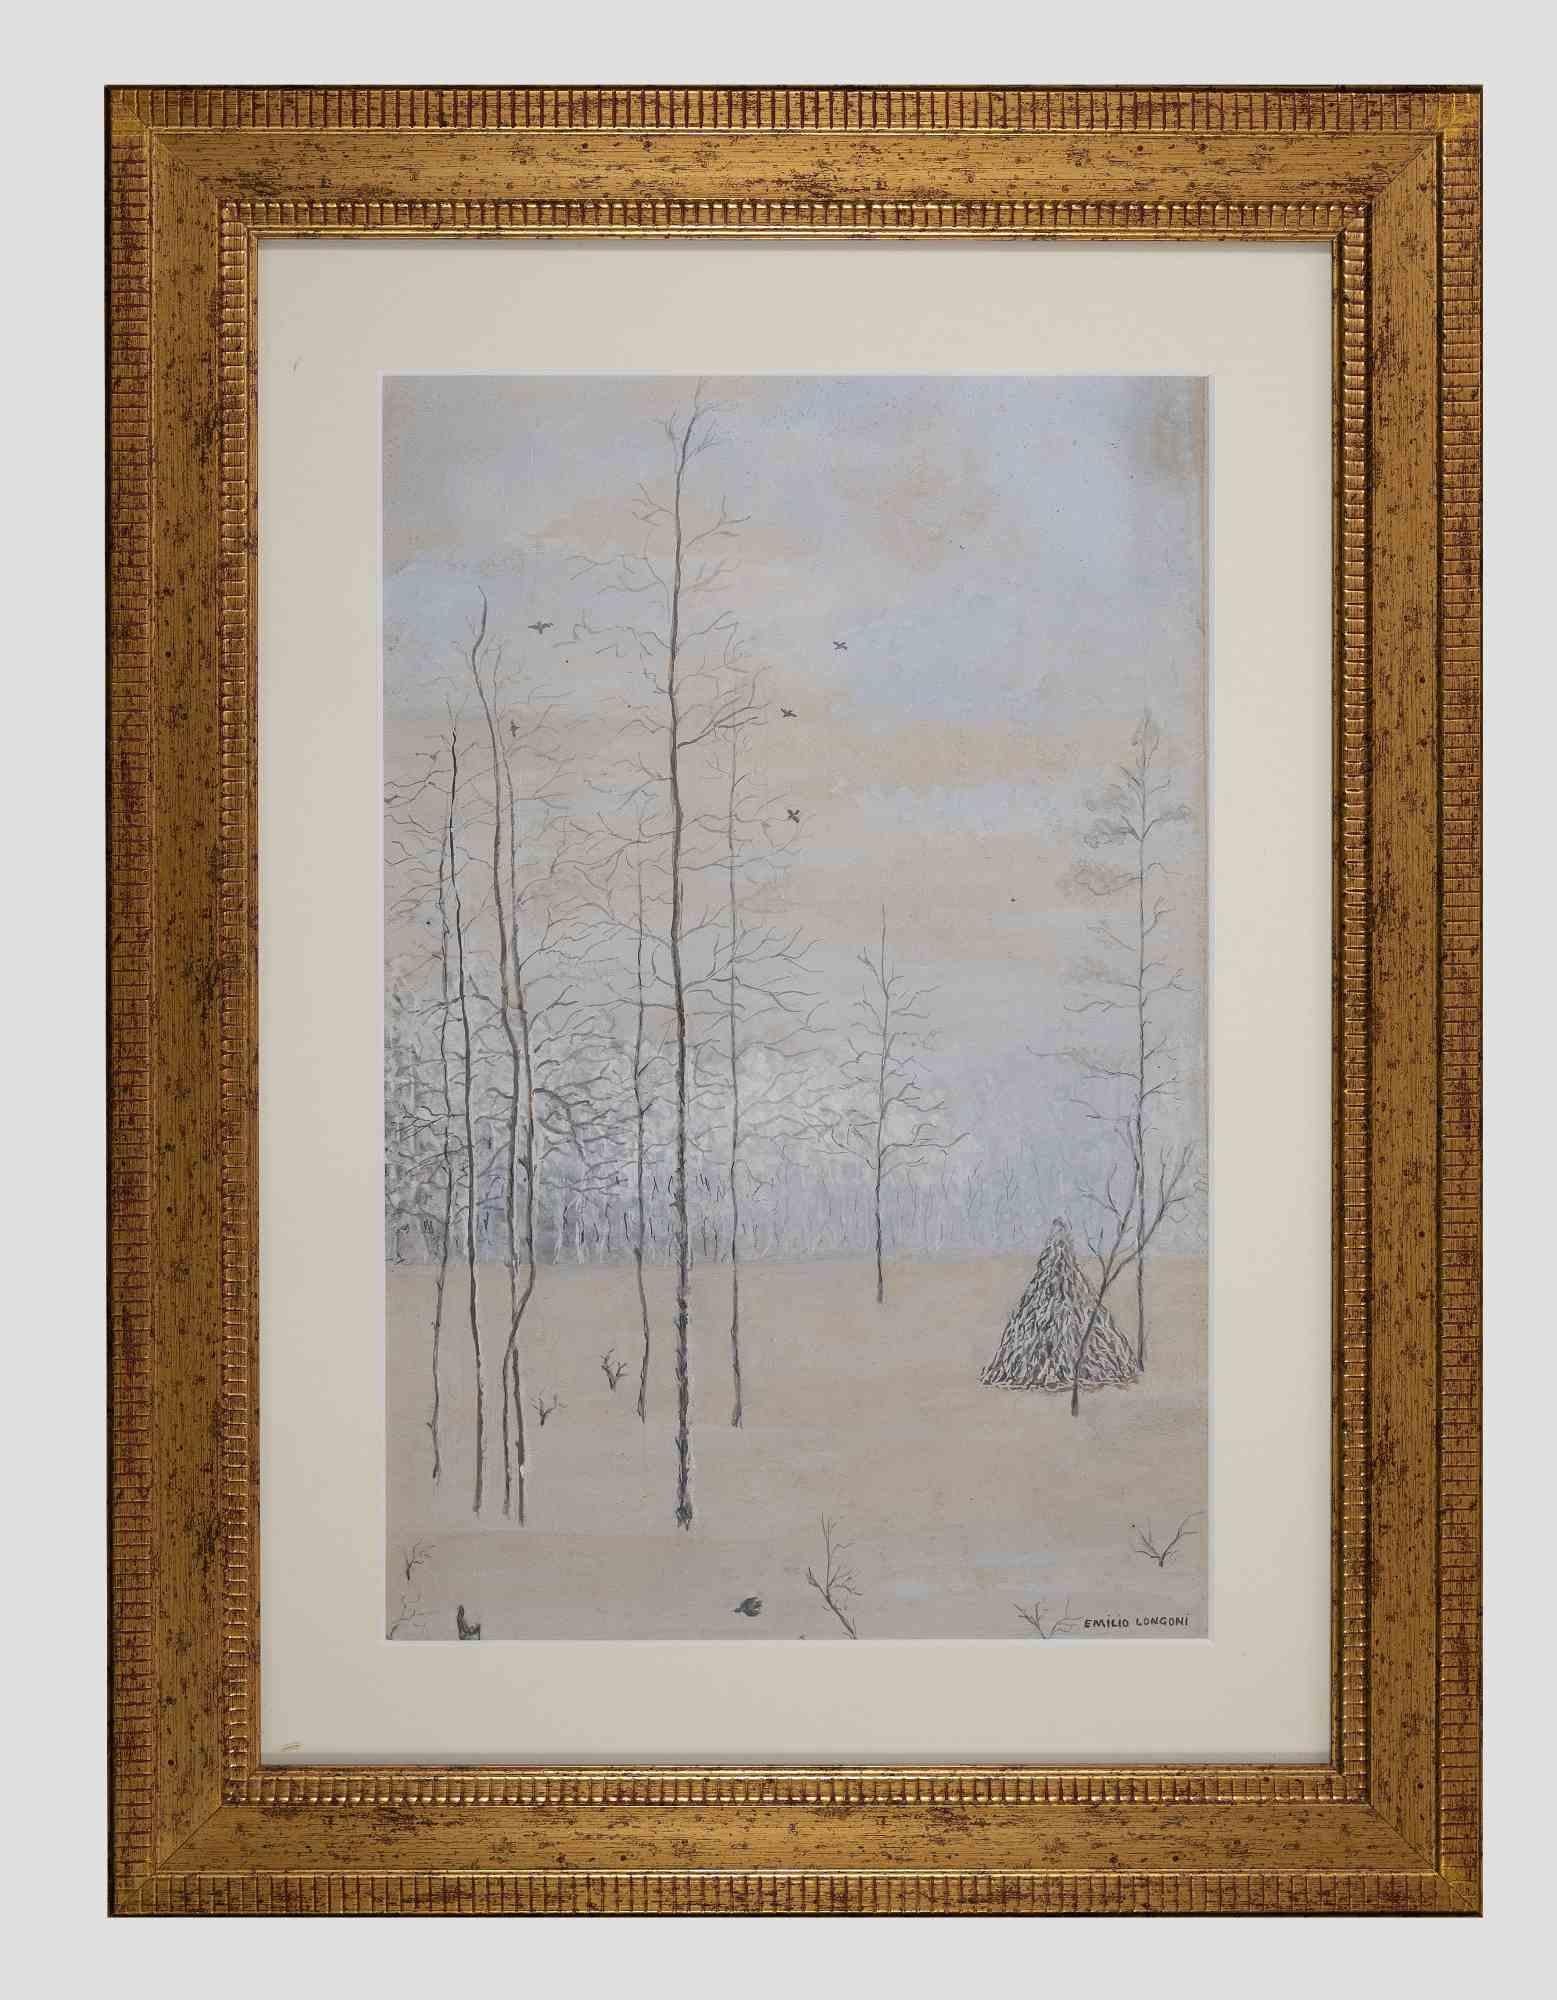 Winter landscape - Drawing by Emilio Longoni - 1920s